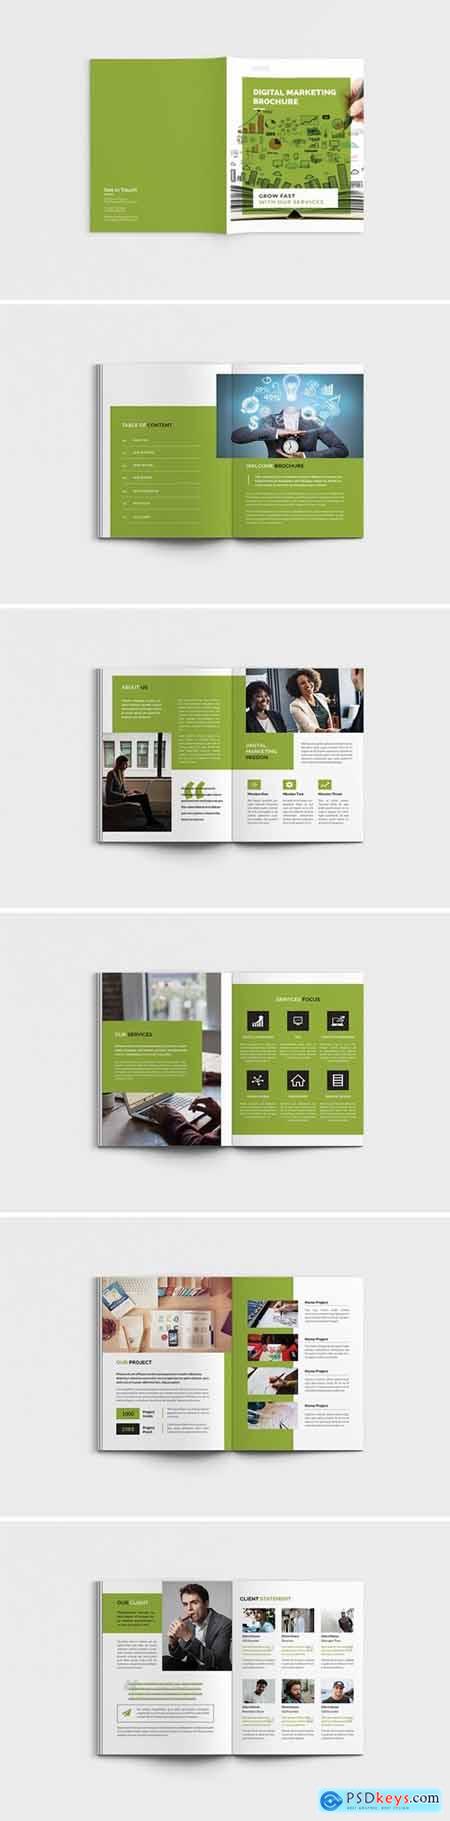 DigiKit - A4 Marketing Brochure 3985818